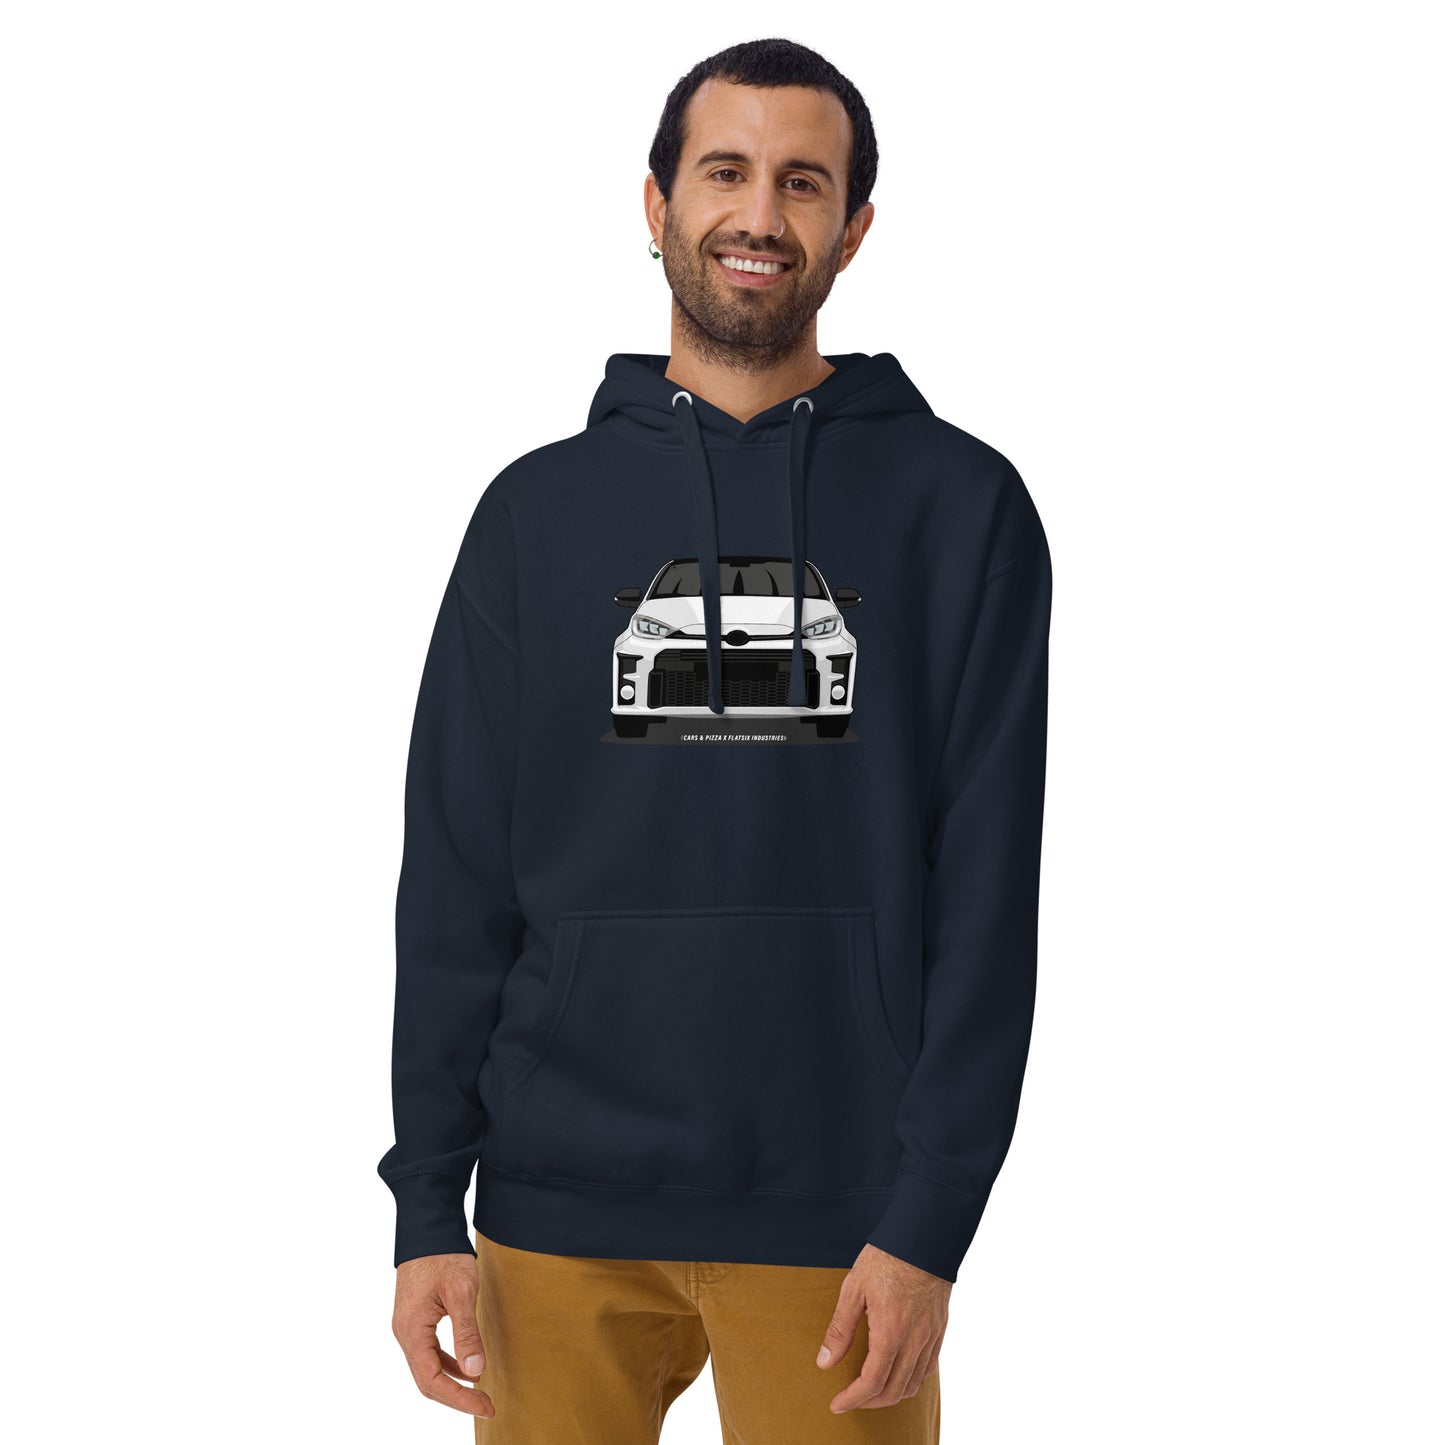 GR Yaris Unisex Hooded Sweatshirt "Garage Days" 1 of 100